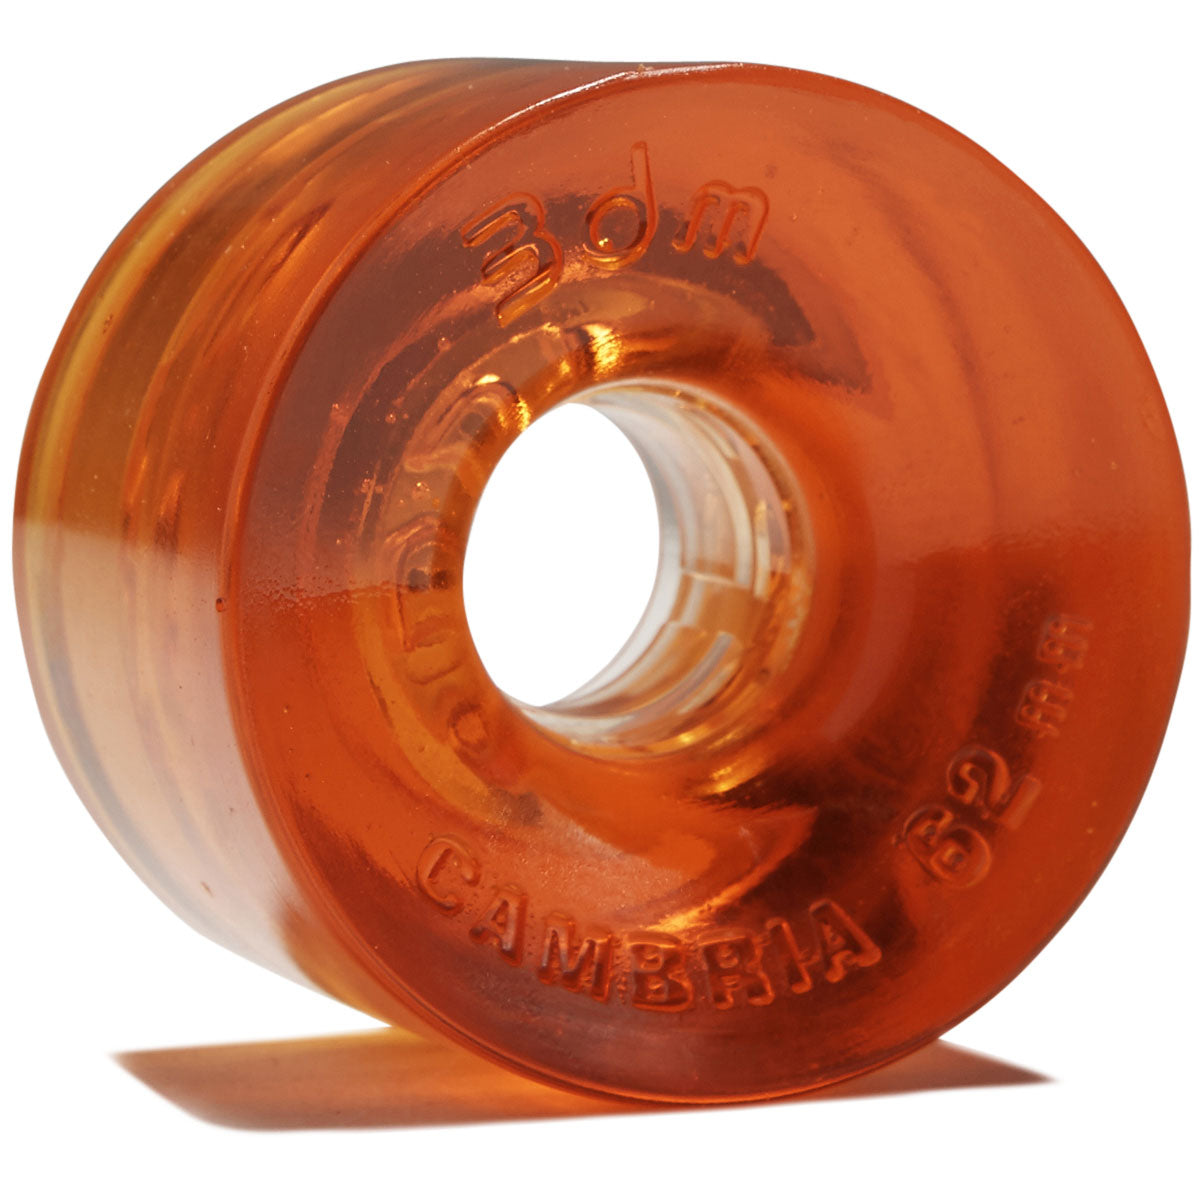 3DM Cambria 80a Longboard Wheels - Clear Orange - 62mm image 1